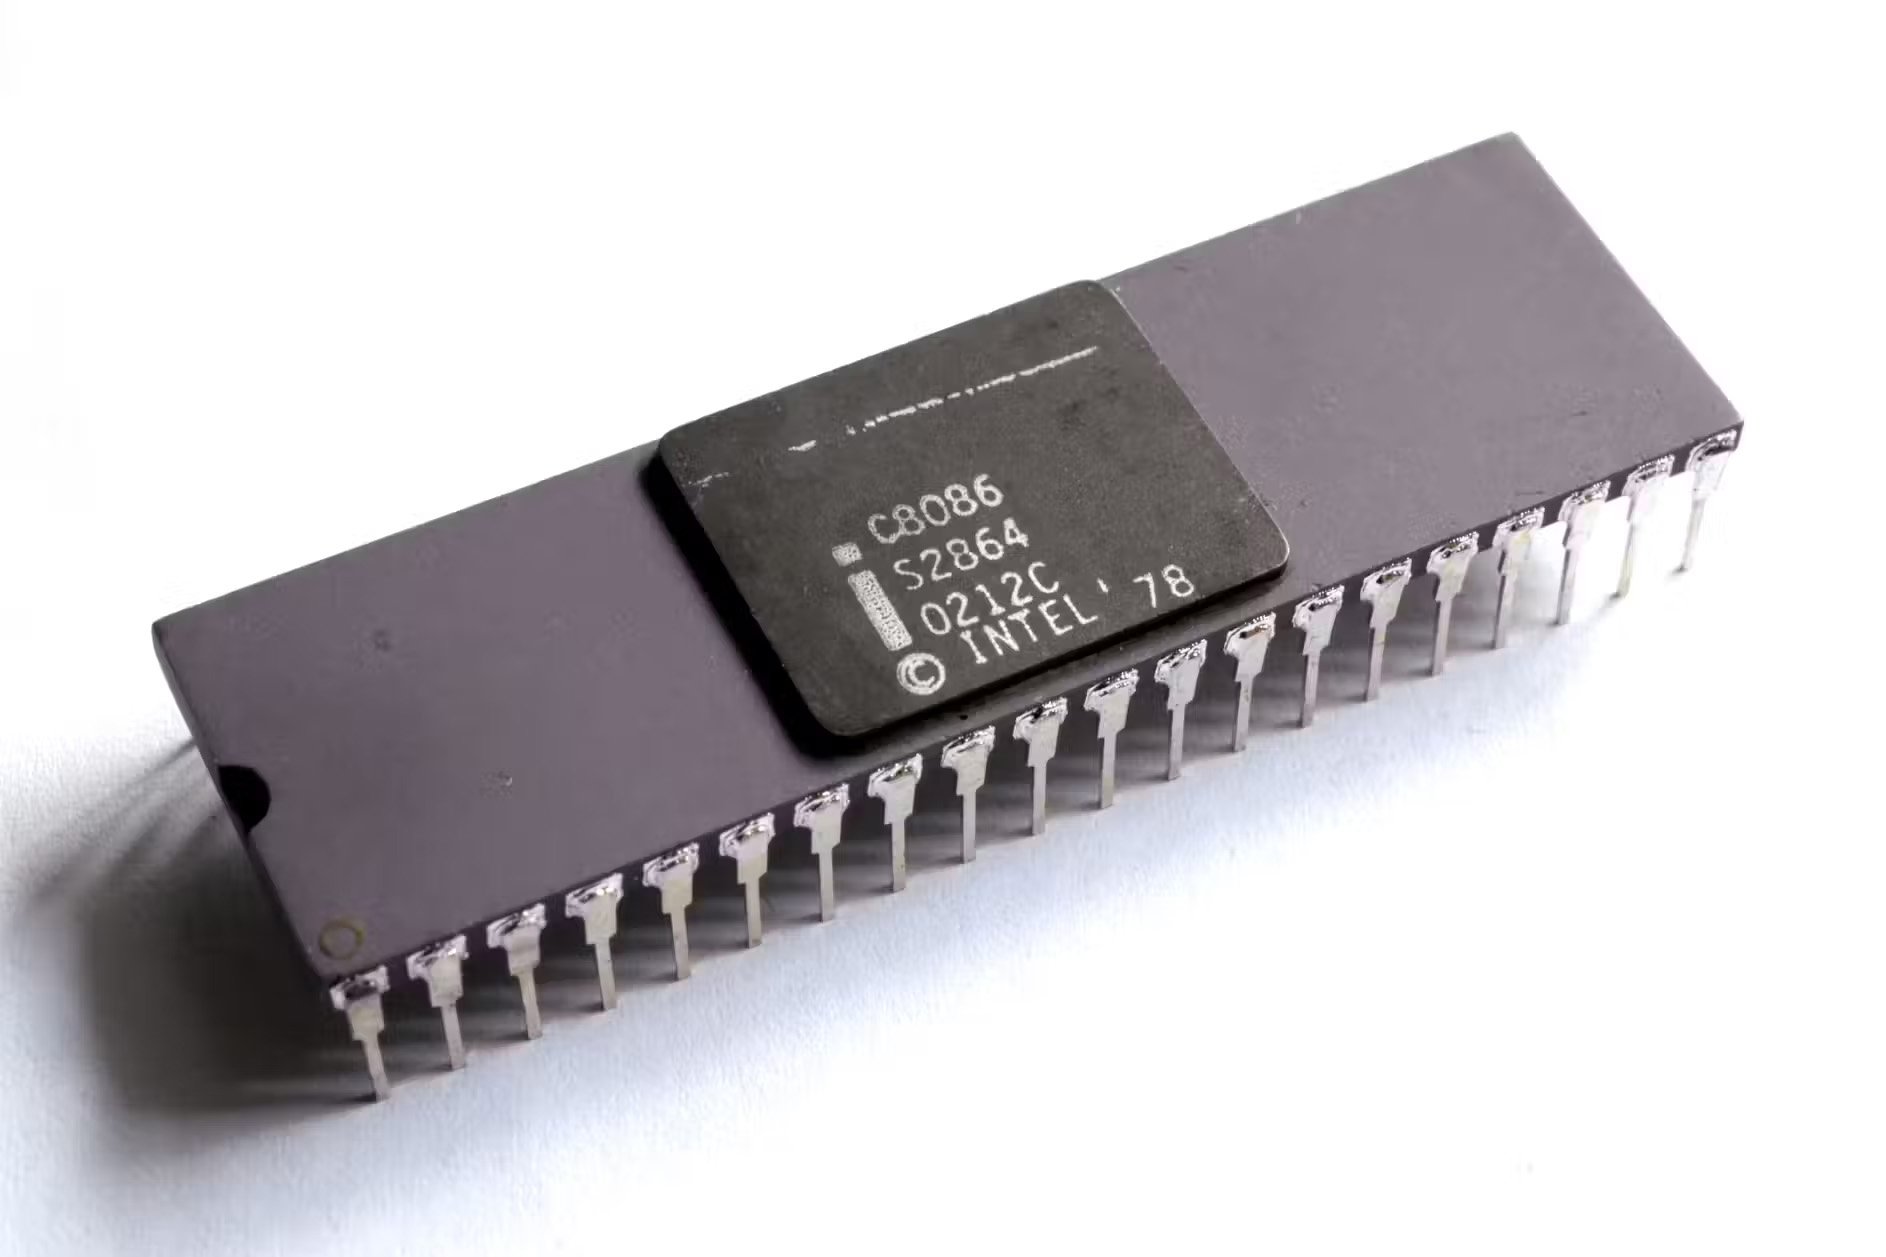 46 лет архитектуре x86 — процессор Intel 8086 был представлен 8 июня 1978 года